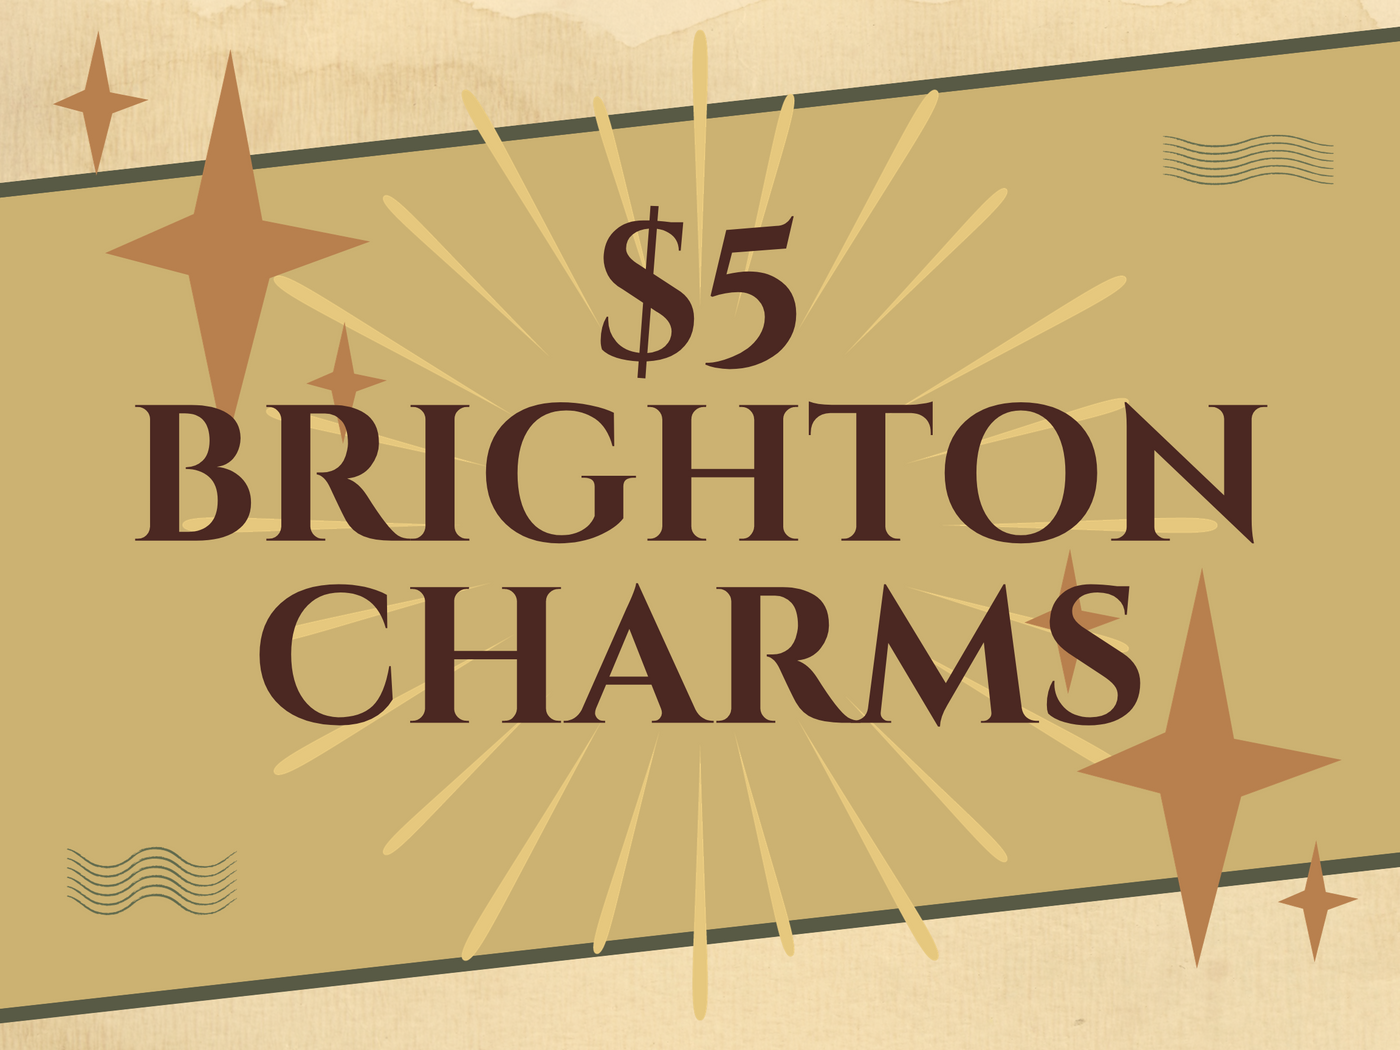 $5 BRIGHTON CHARMS